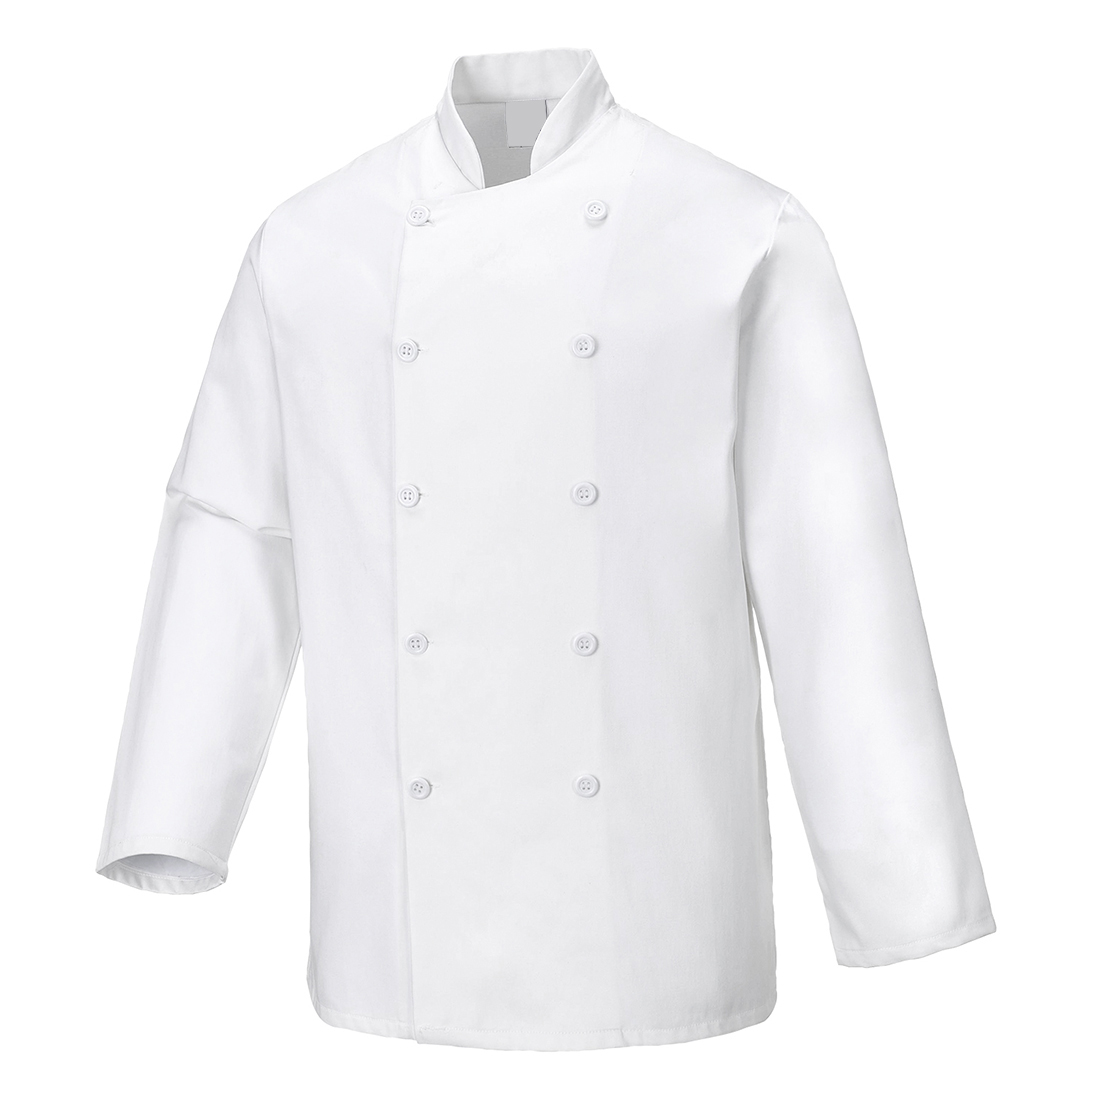 Sussex Chefs Jacket L/S White